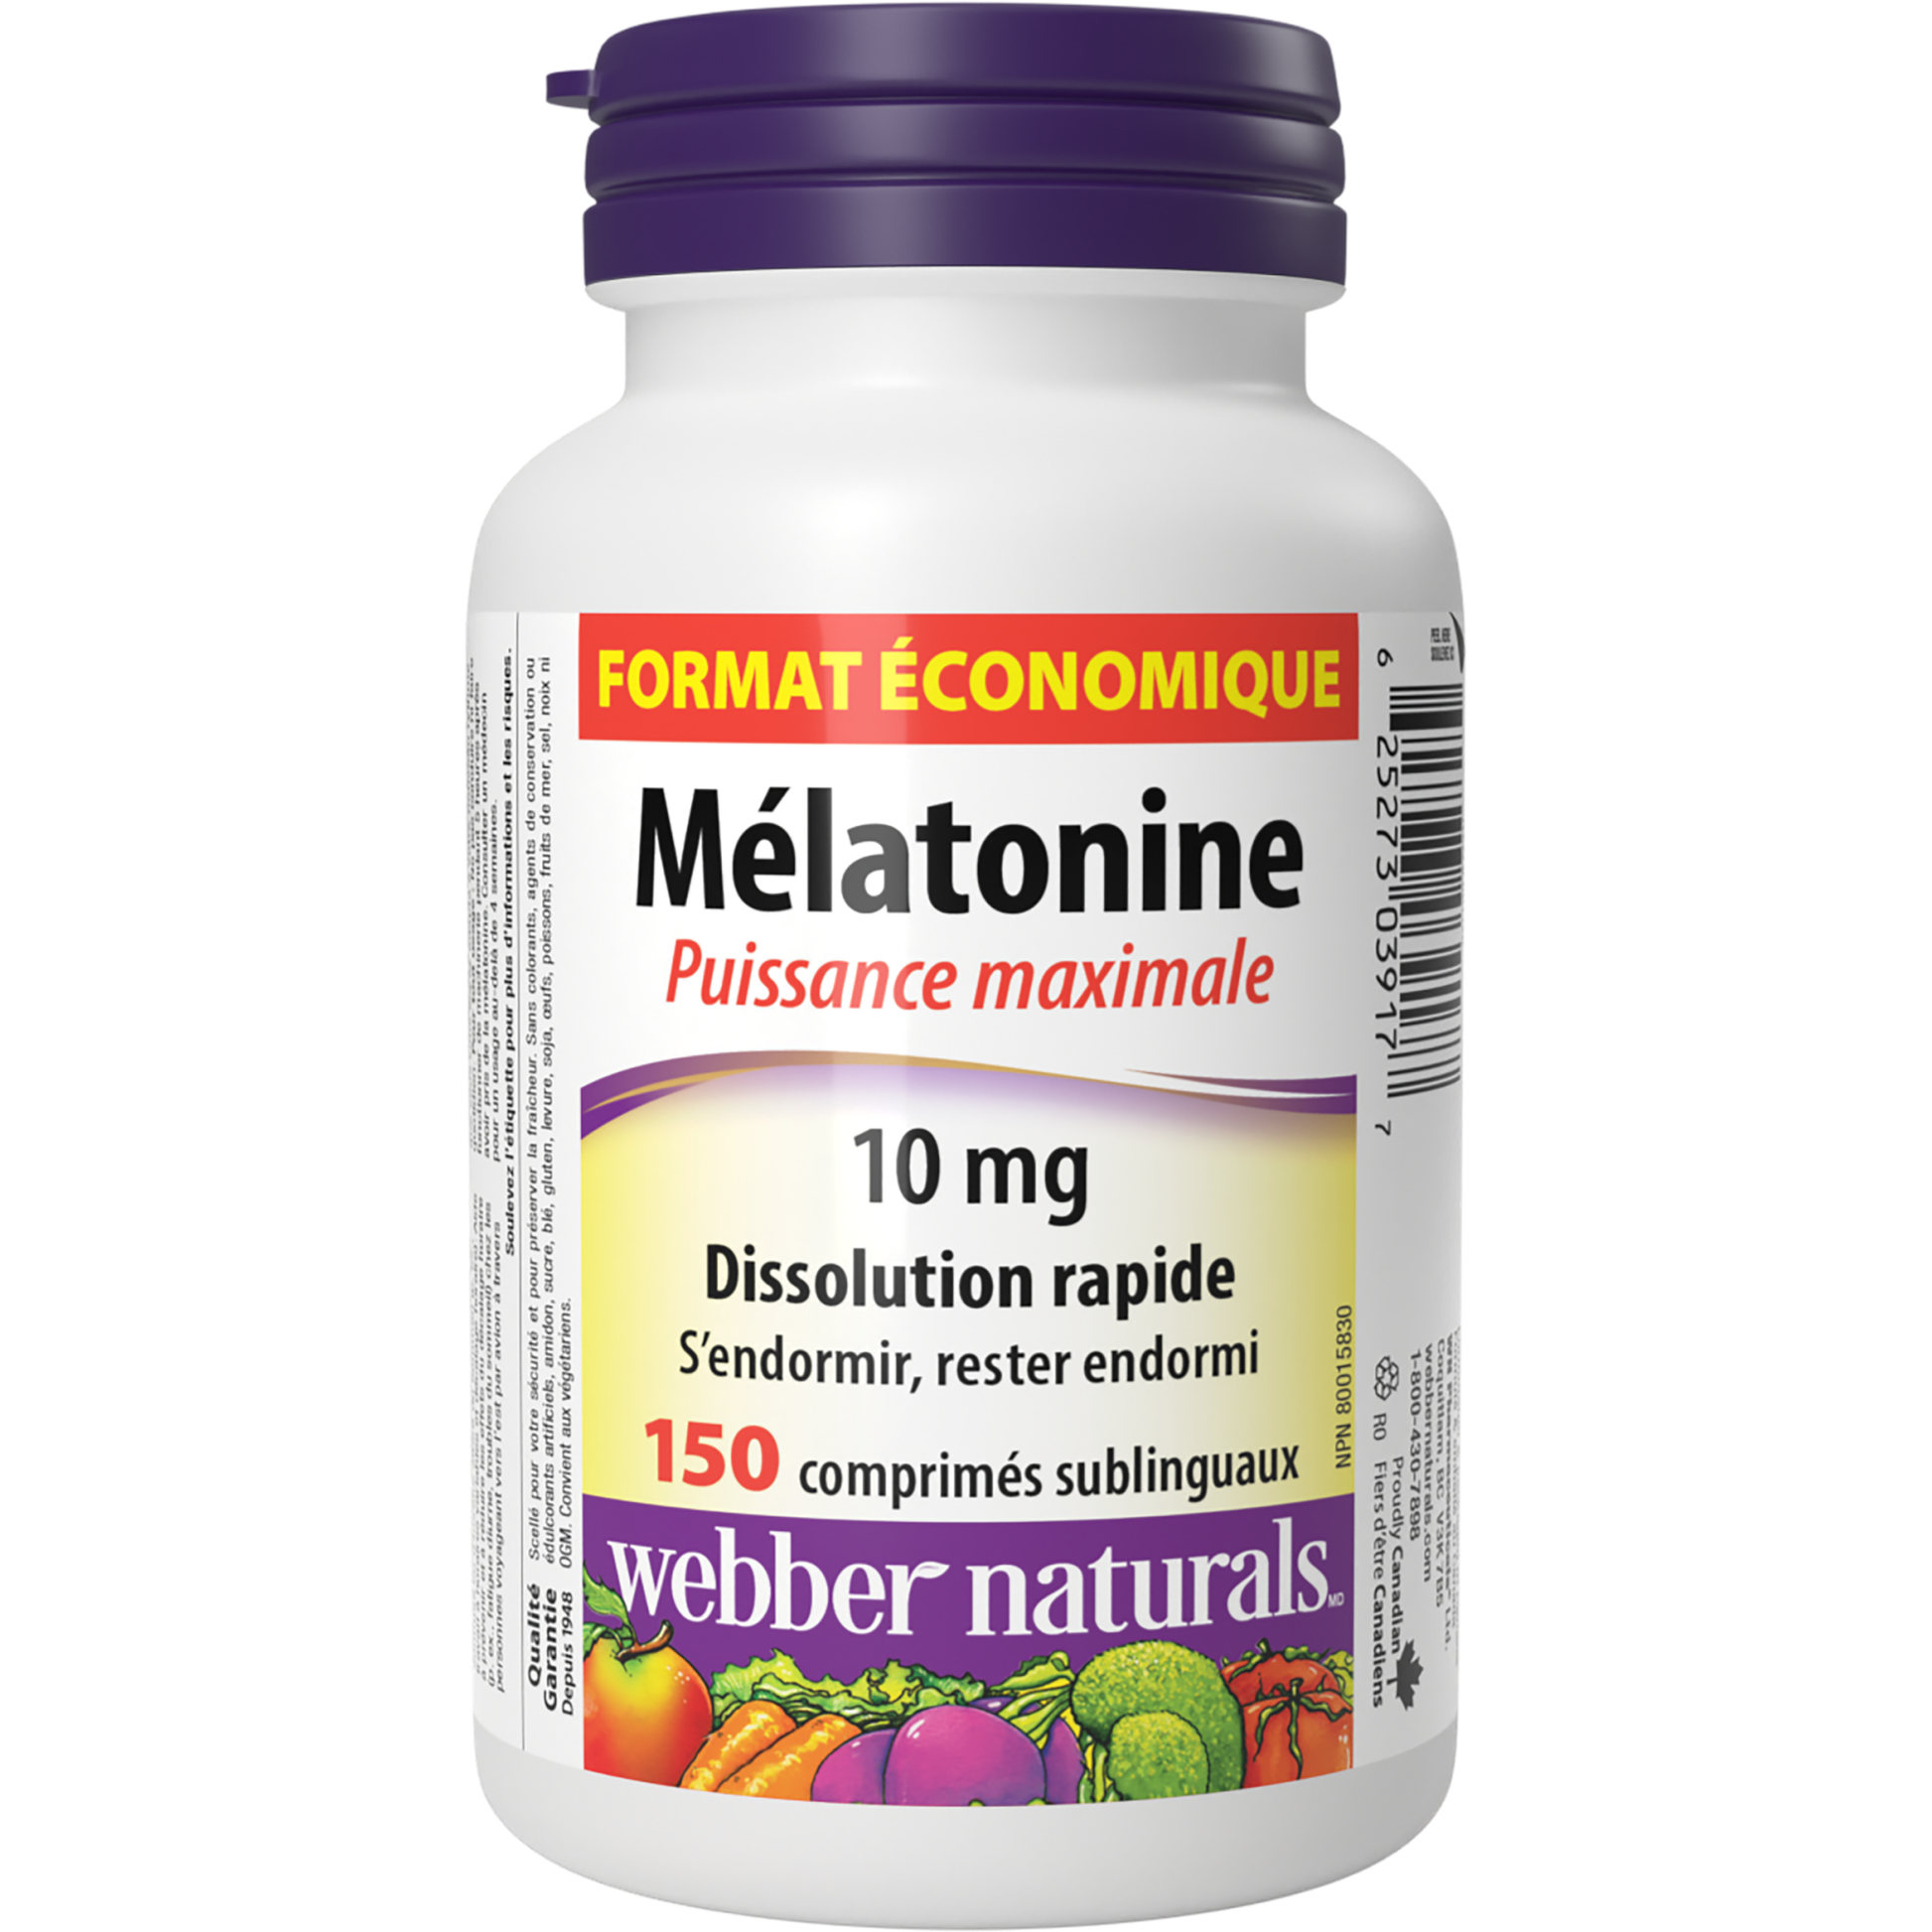 Puissance maximale Mélatonine Dissolution rapide 10 mg for Webber Naturals|v|hi-res|WN3917